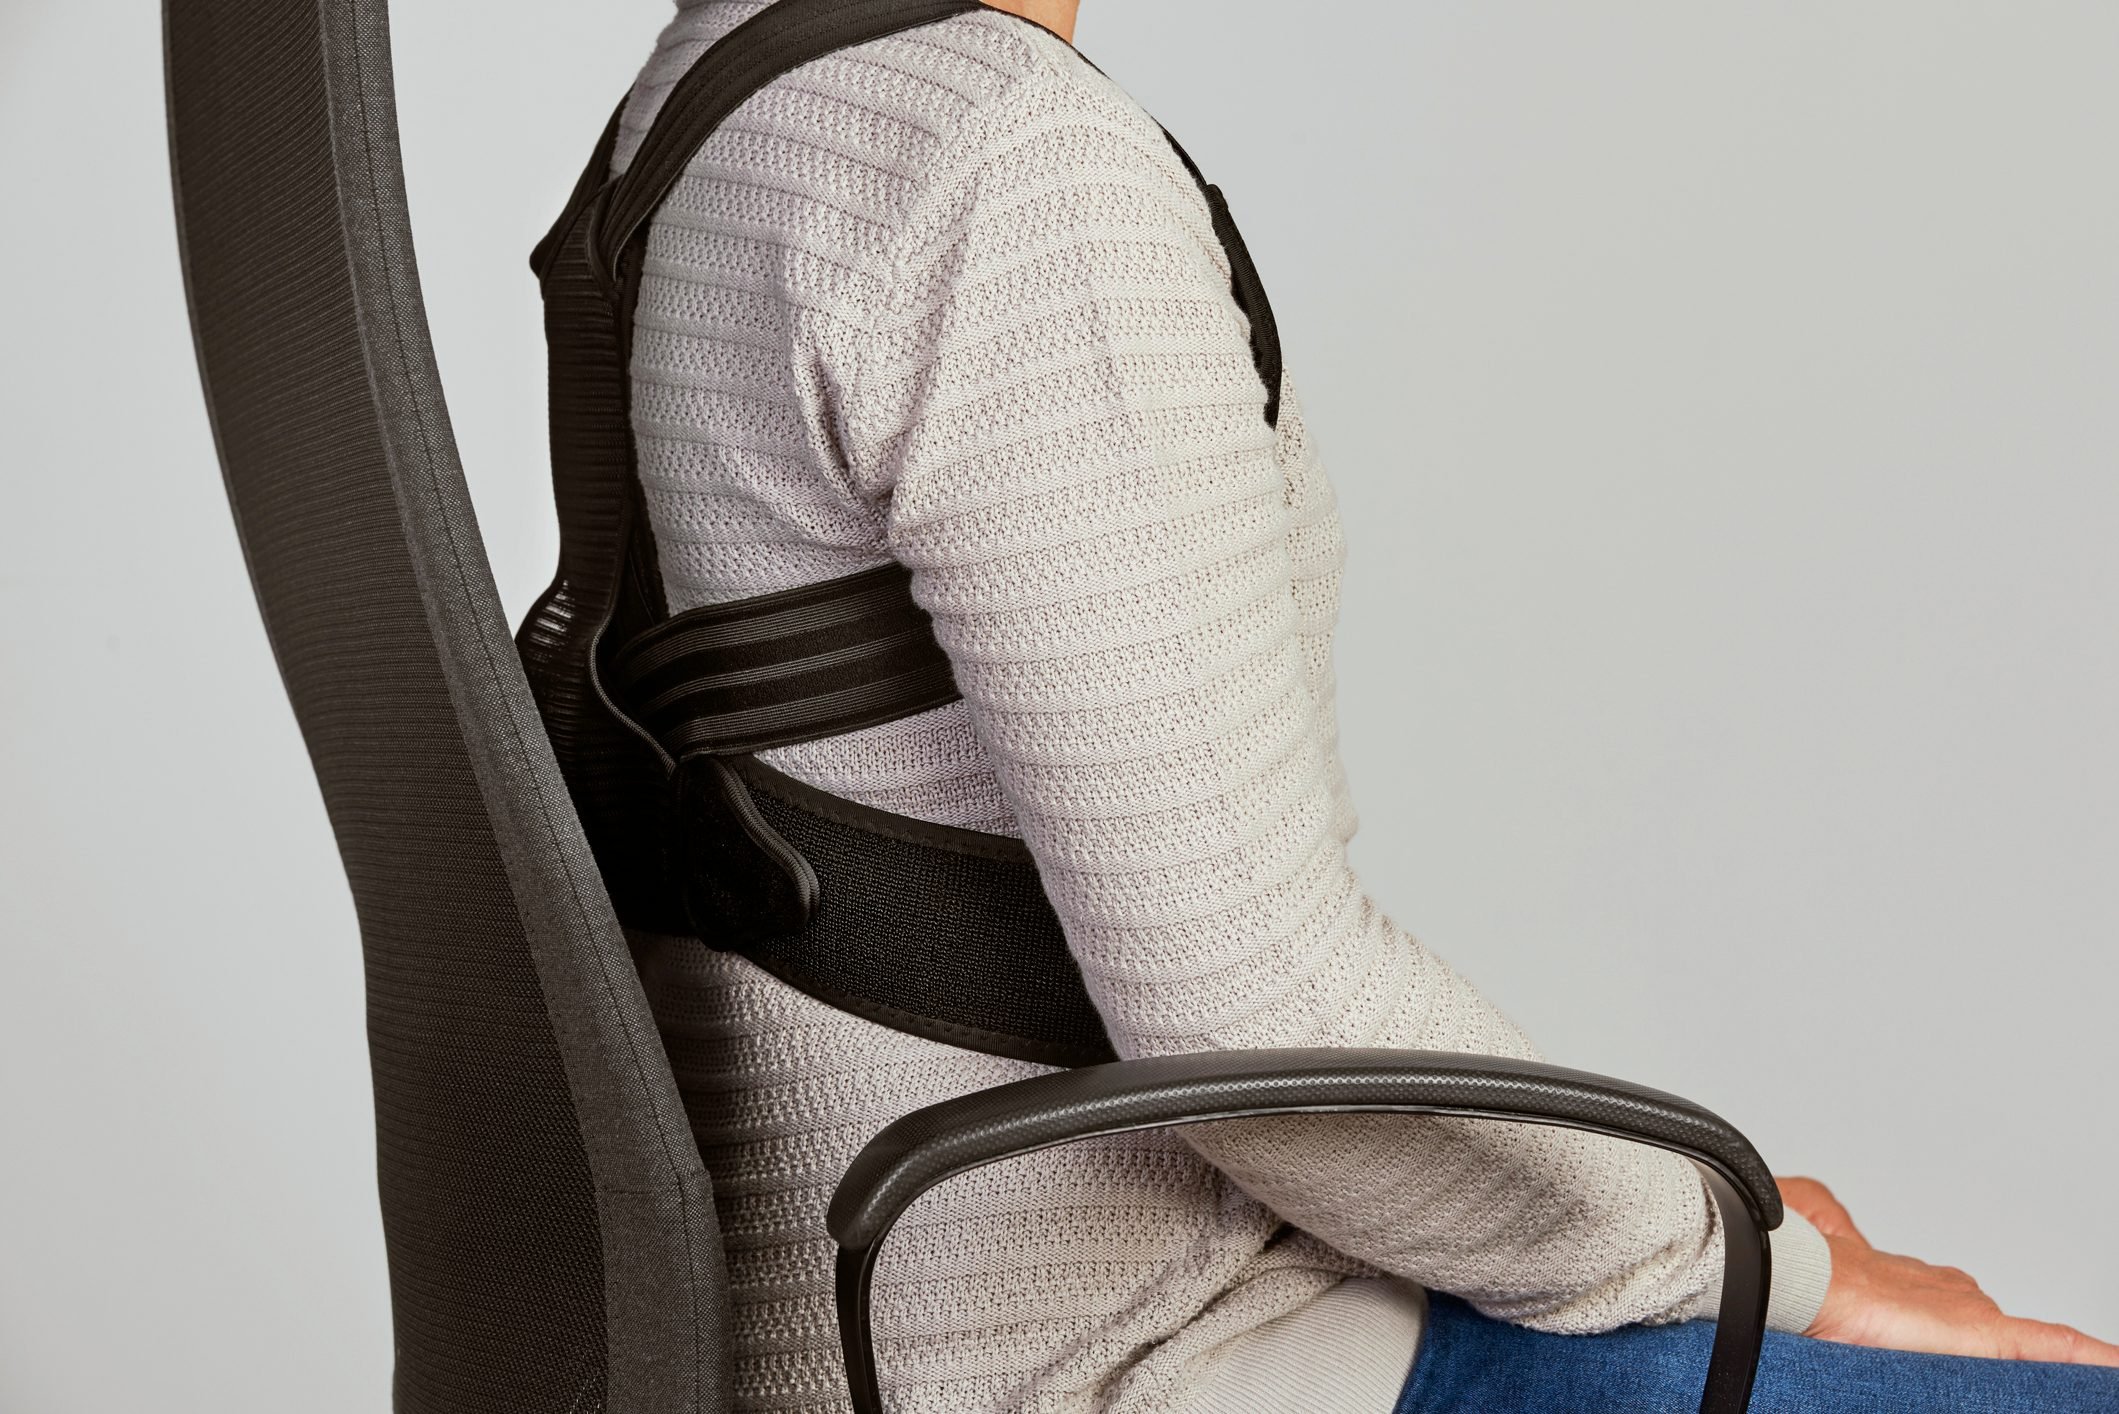 Do Posture Correctors Work? Here's What Doctors Say